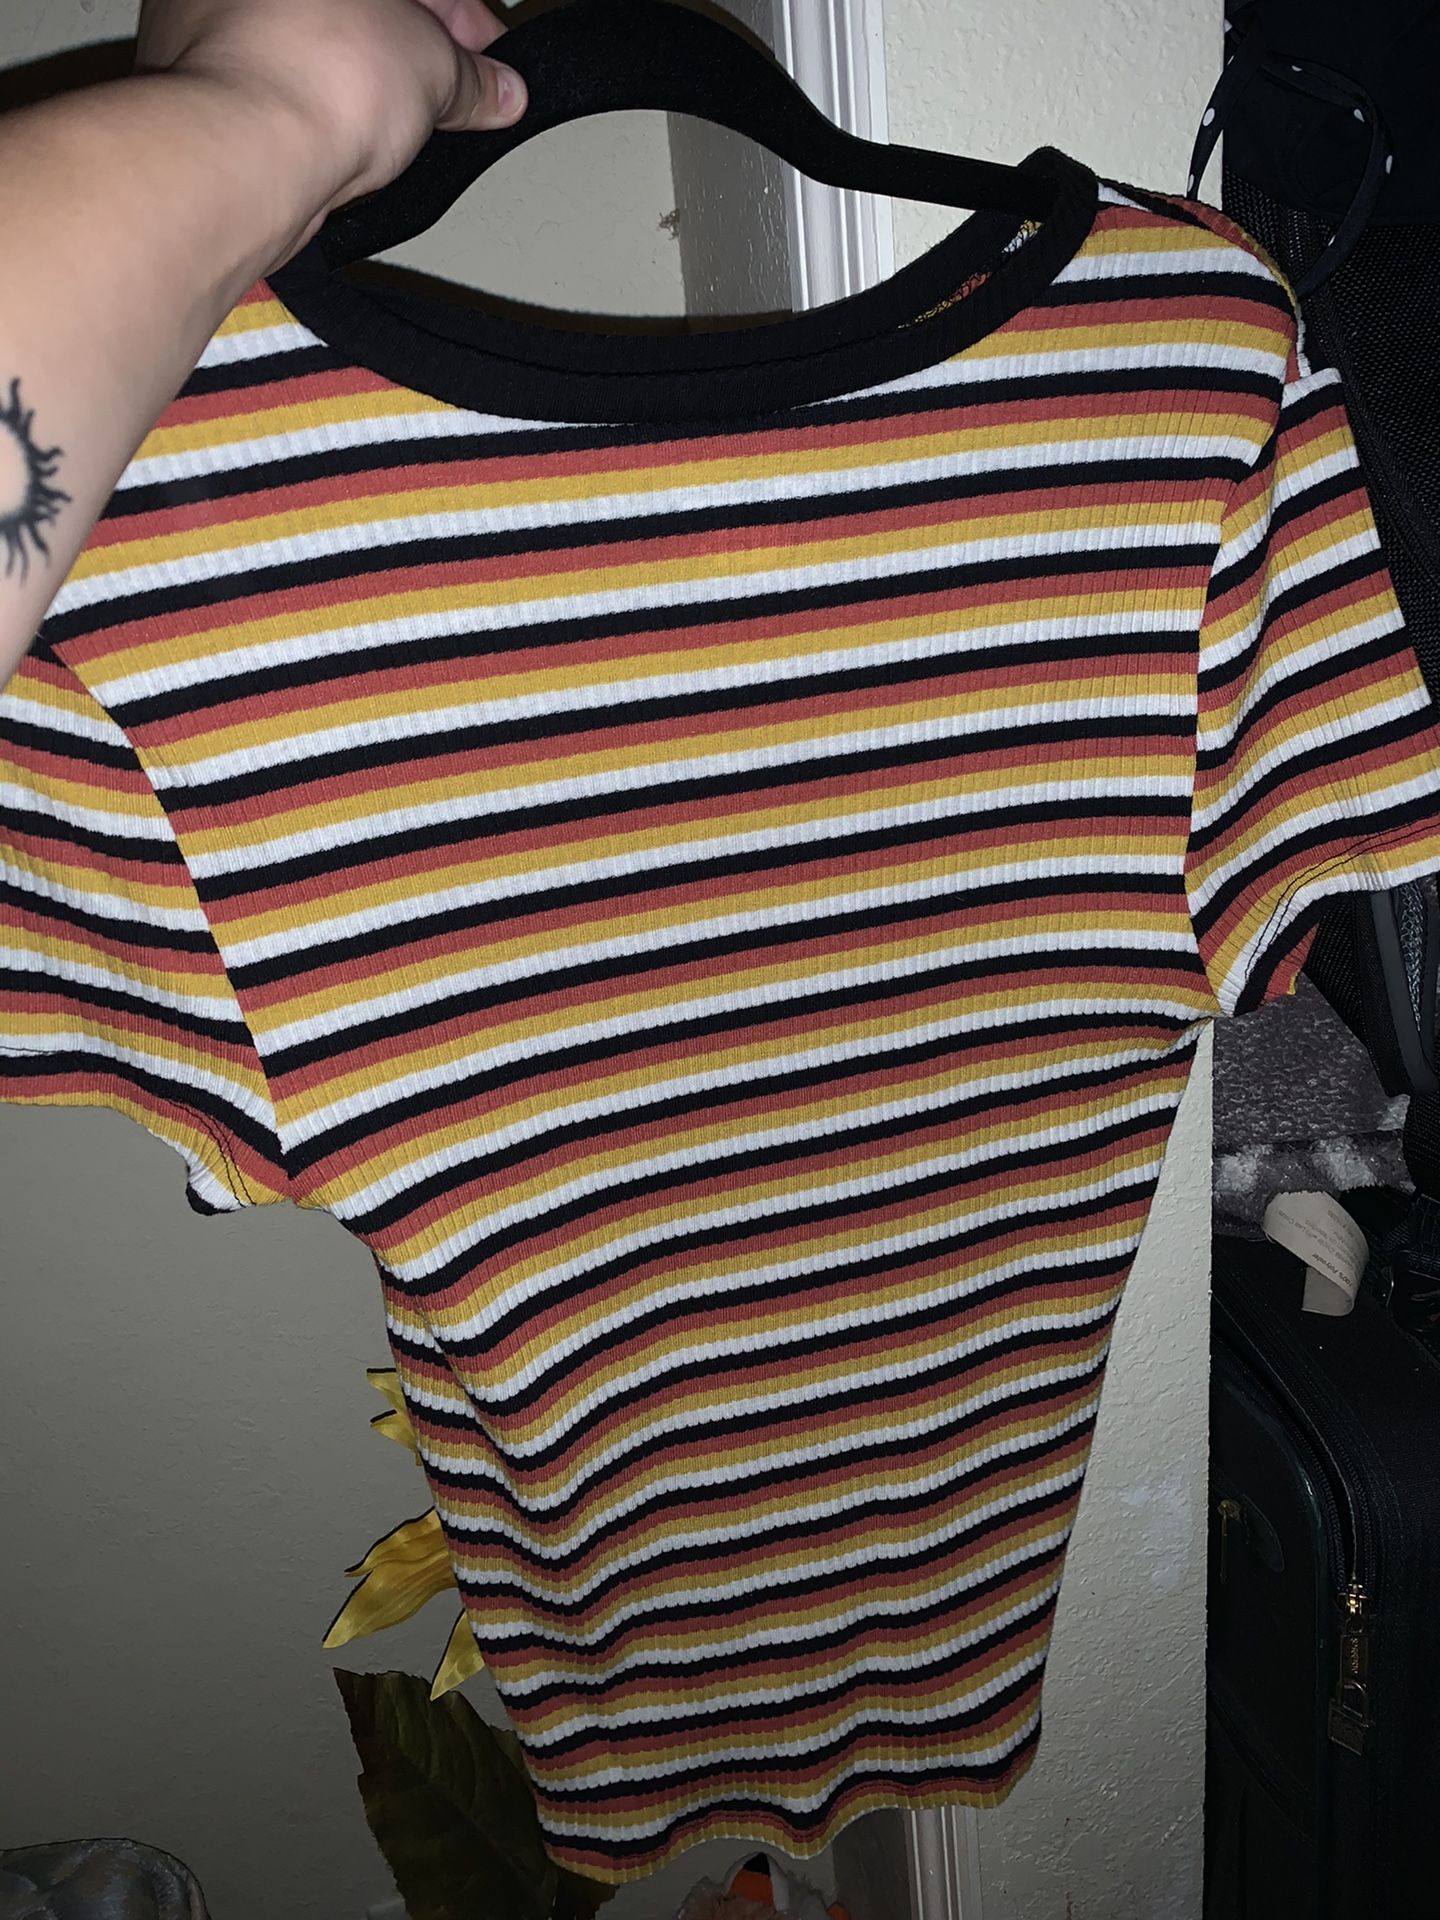 Girly Striped shirt